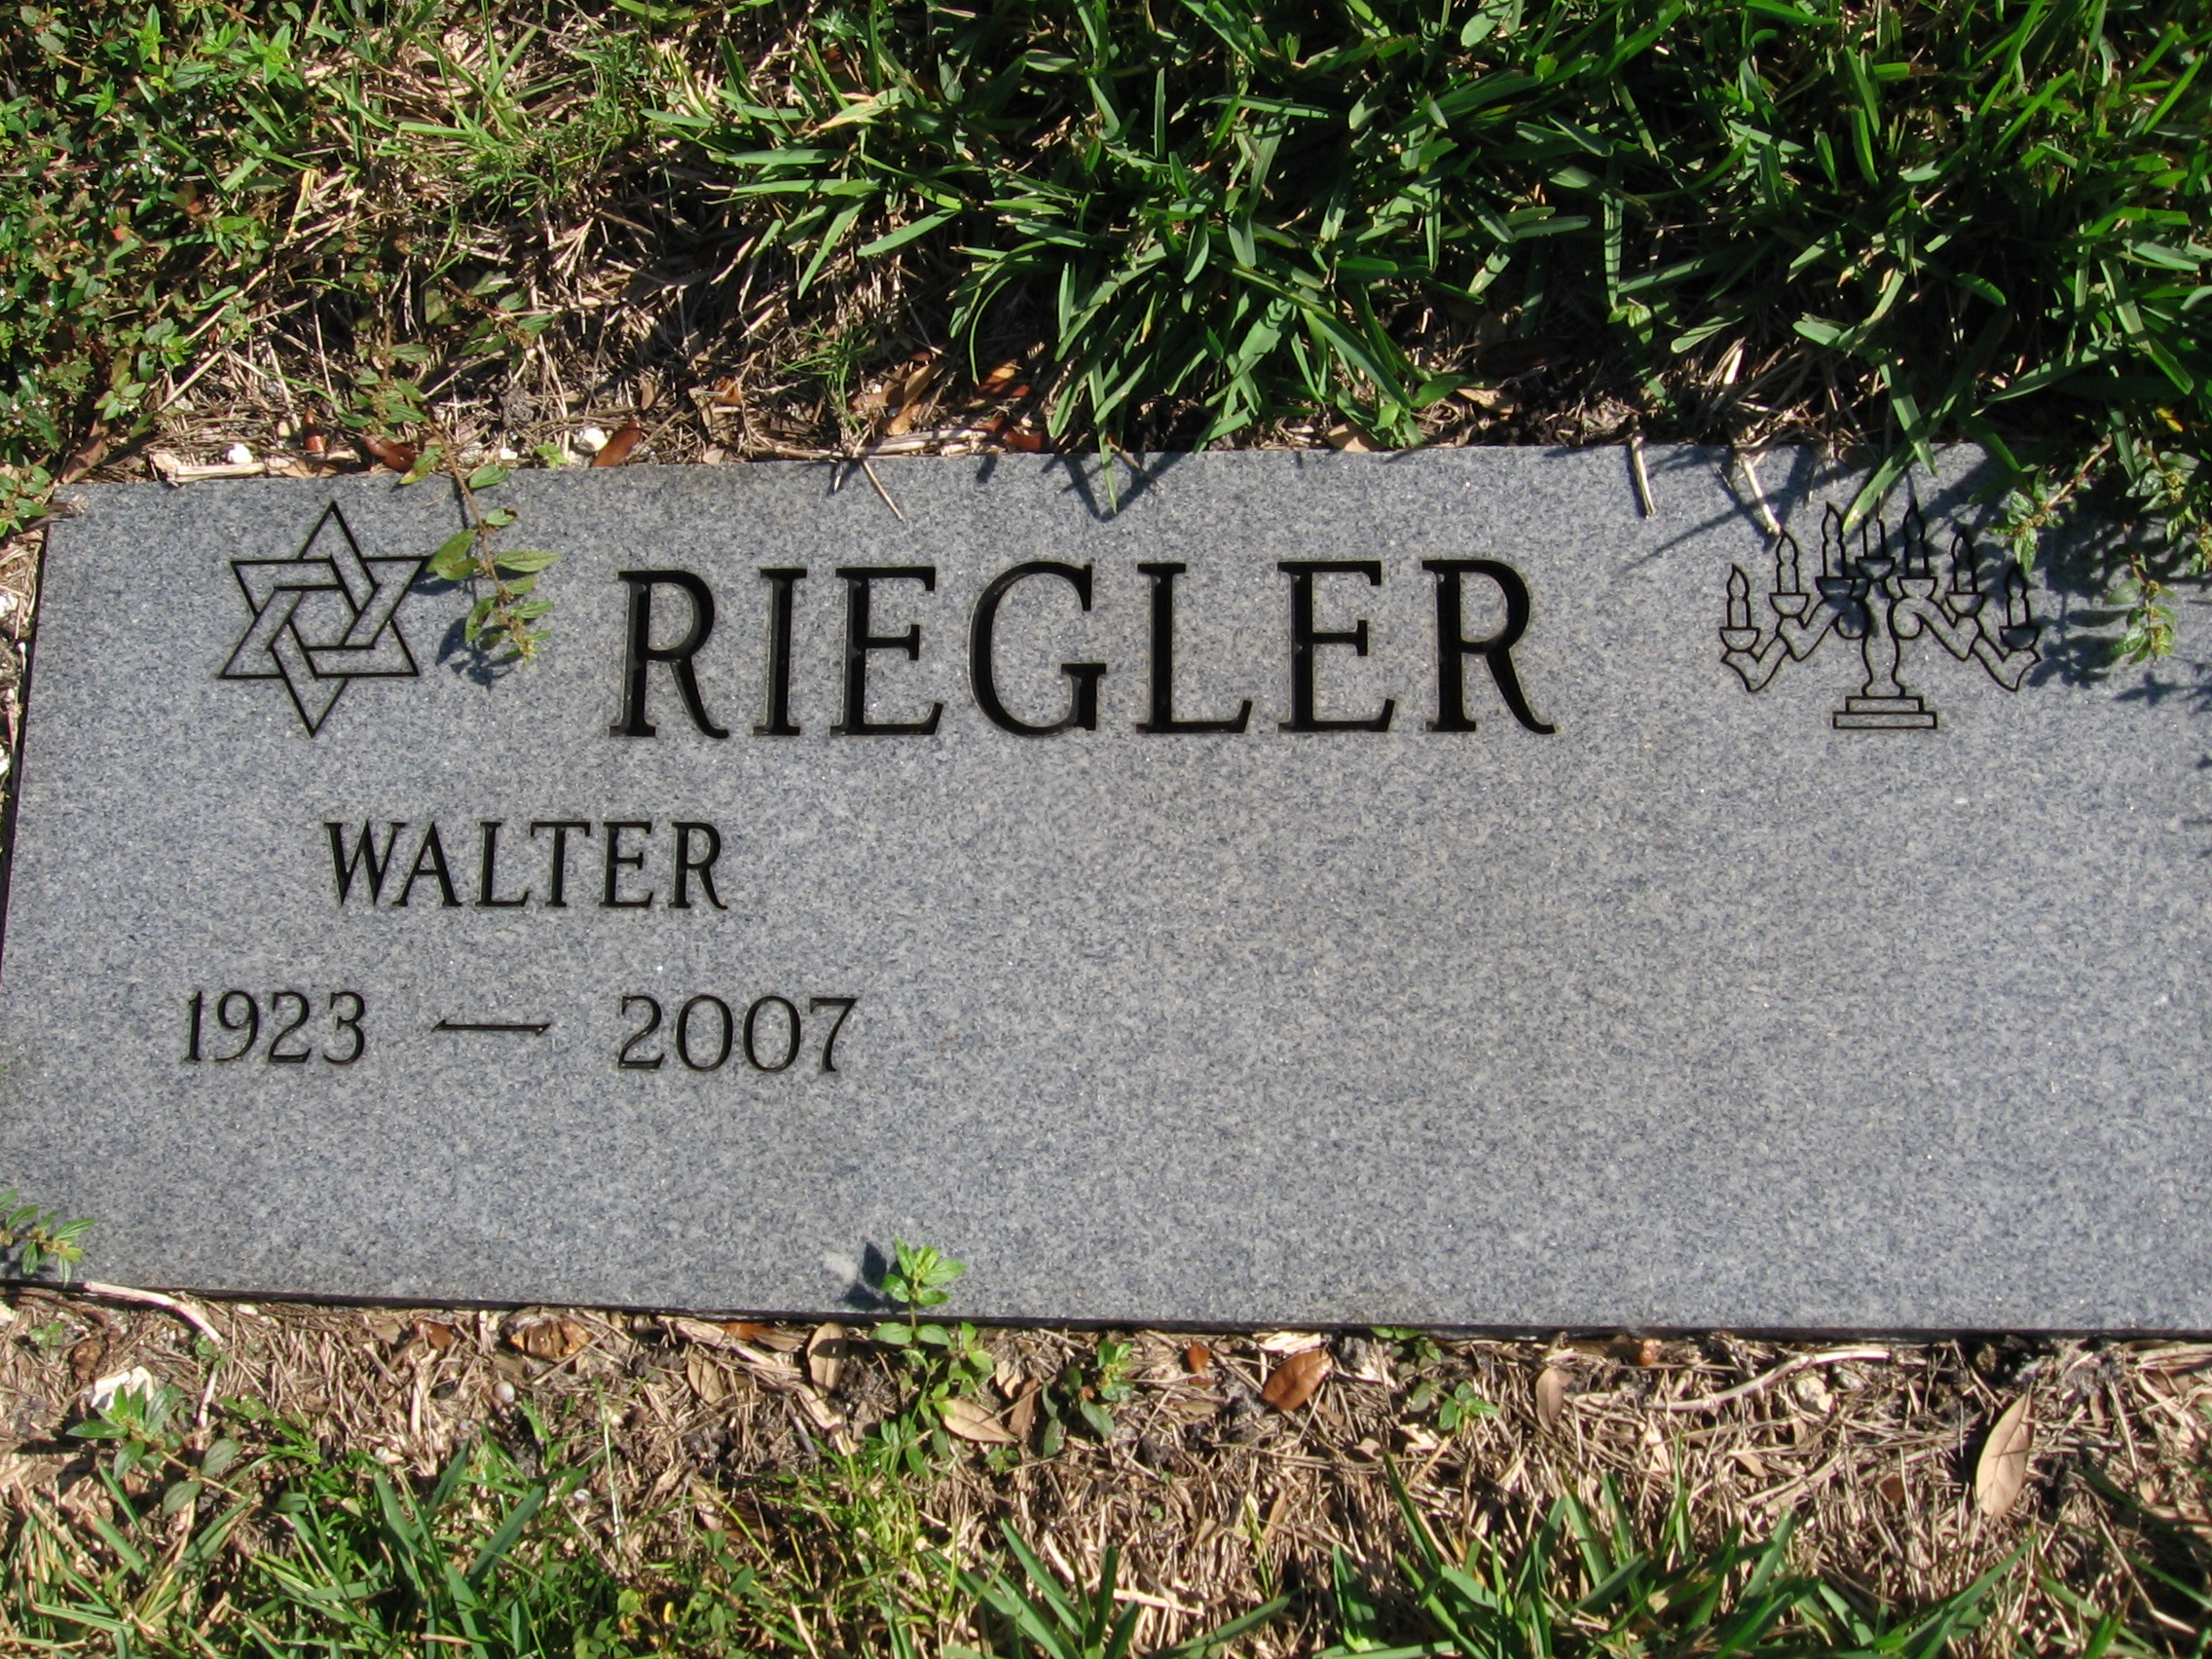 Walter Riegler